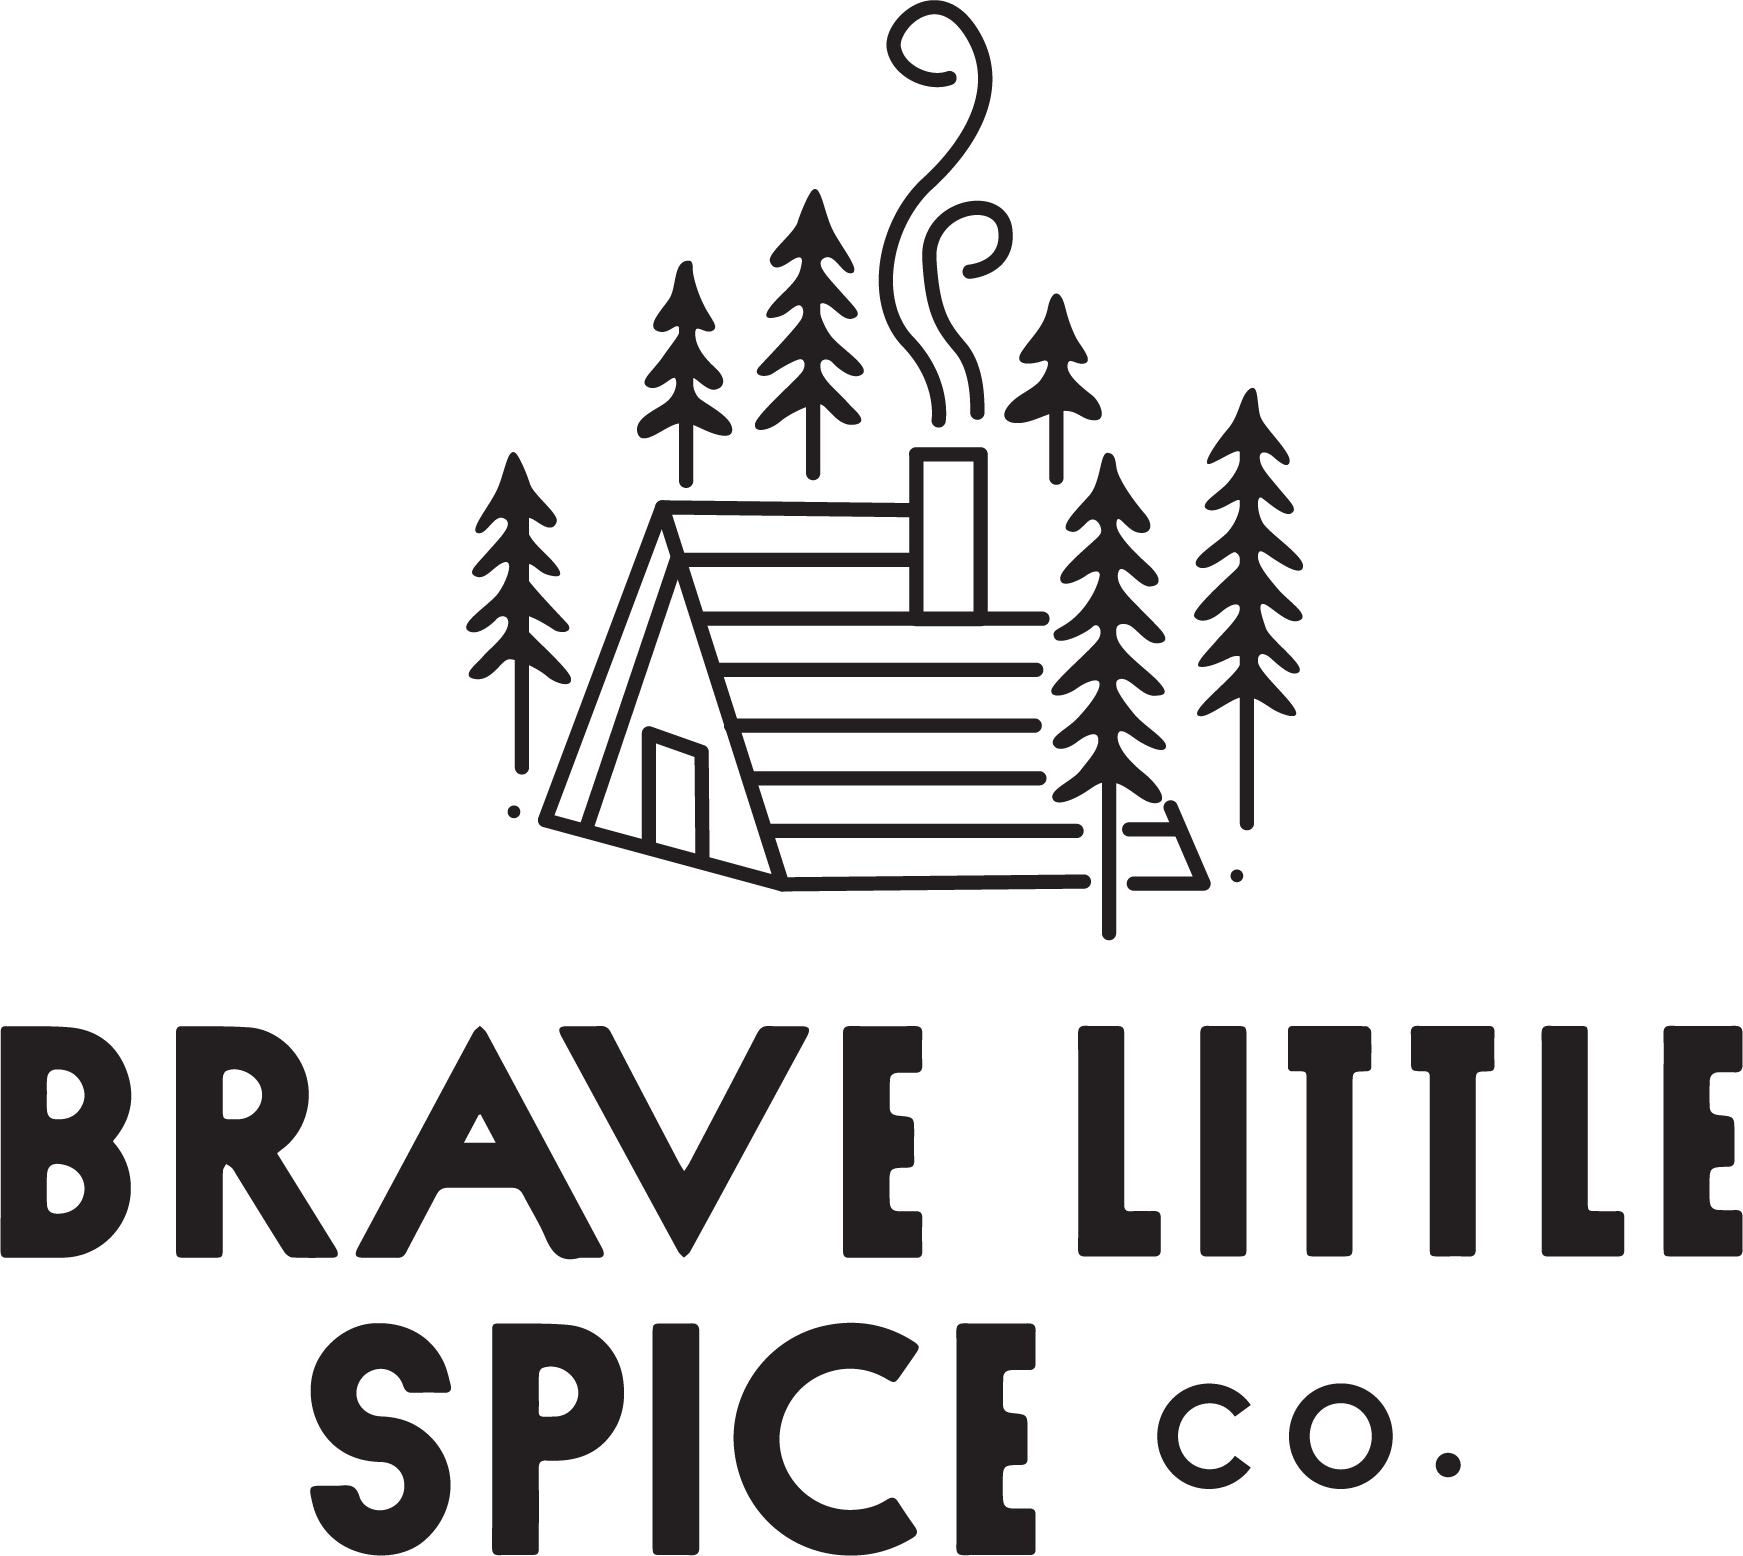 Brave Little Spice Co.